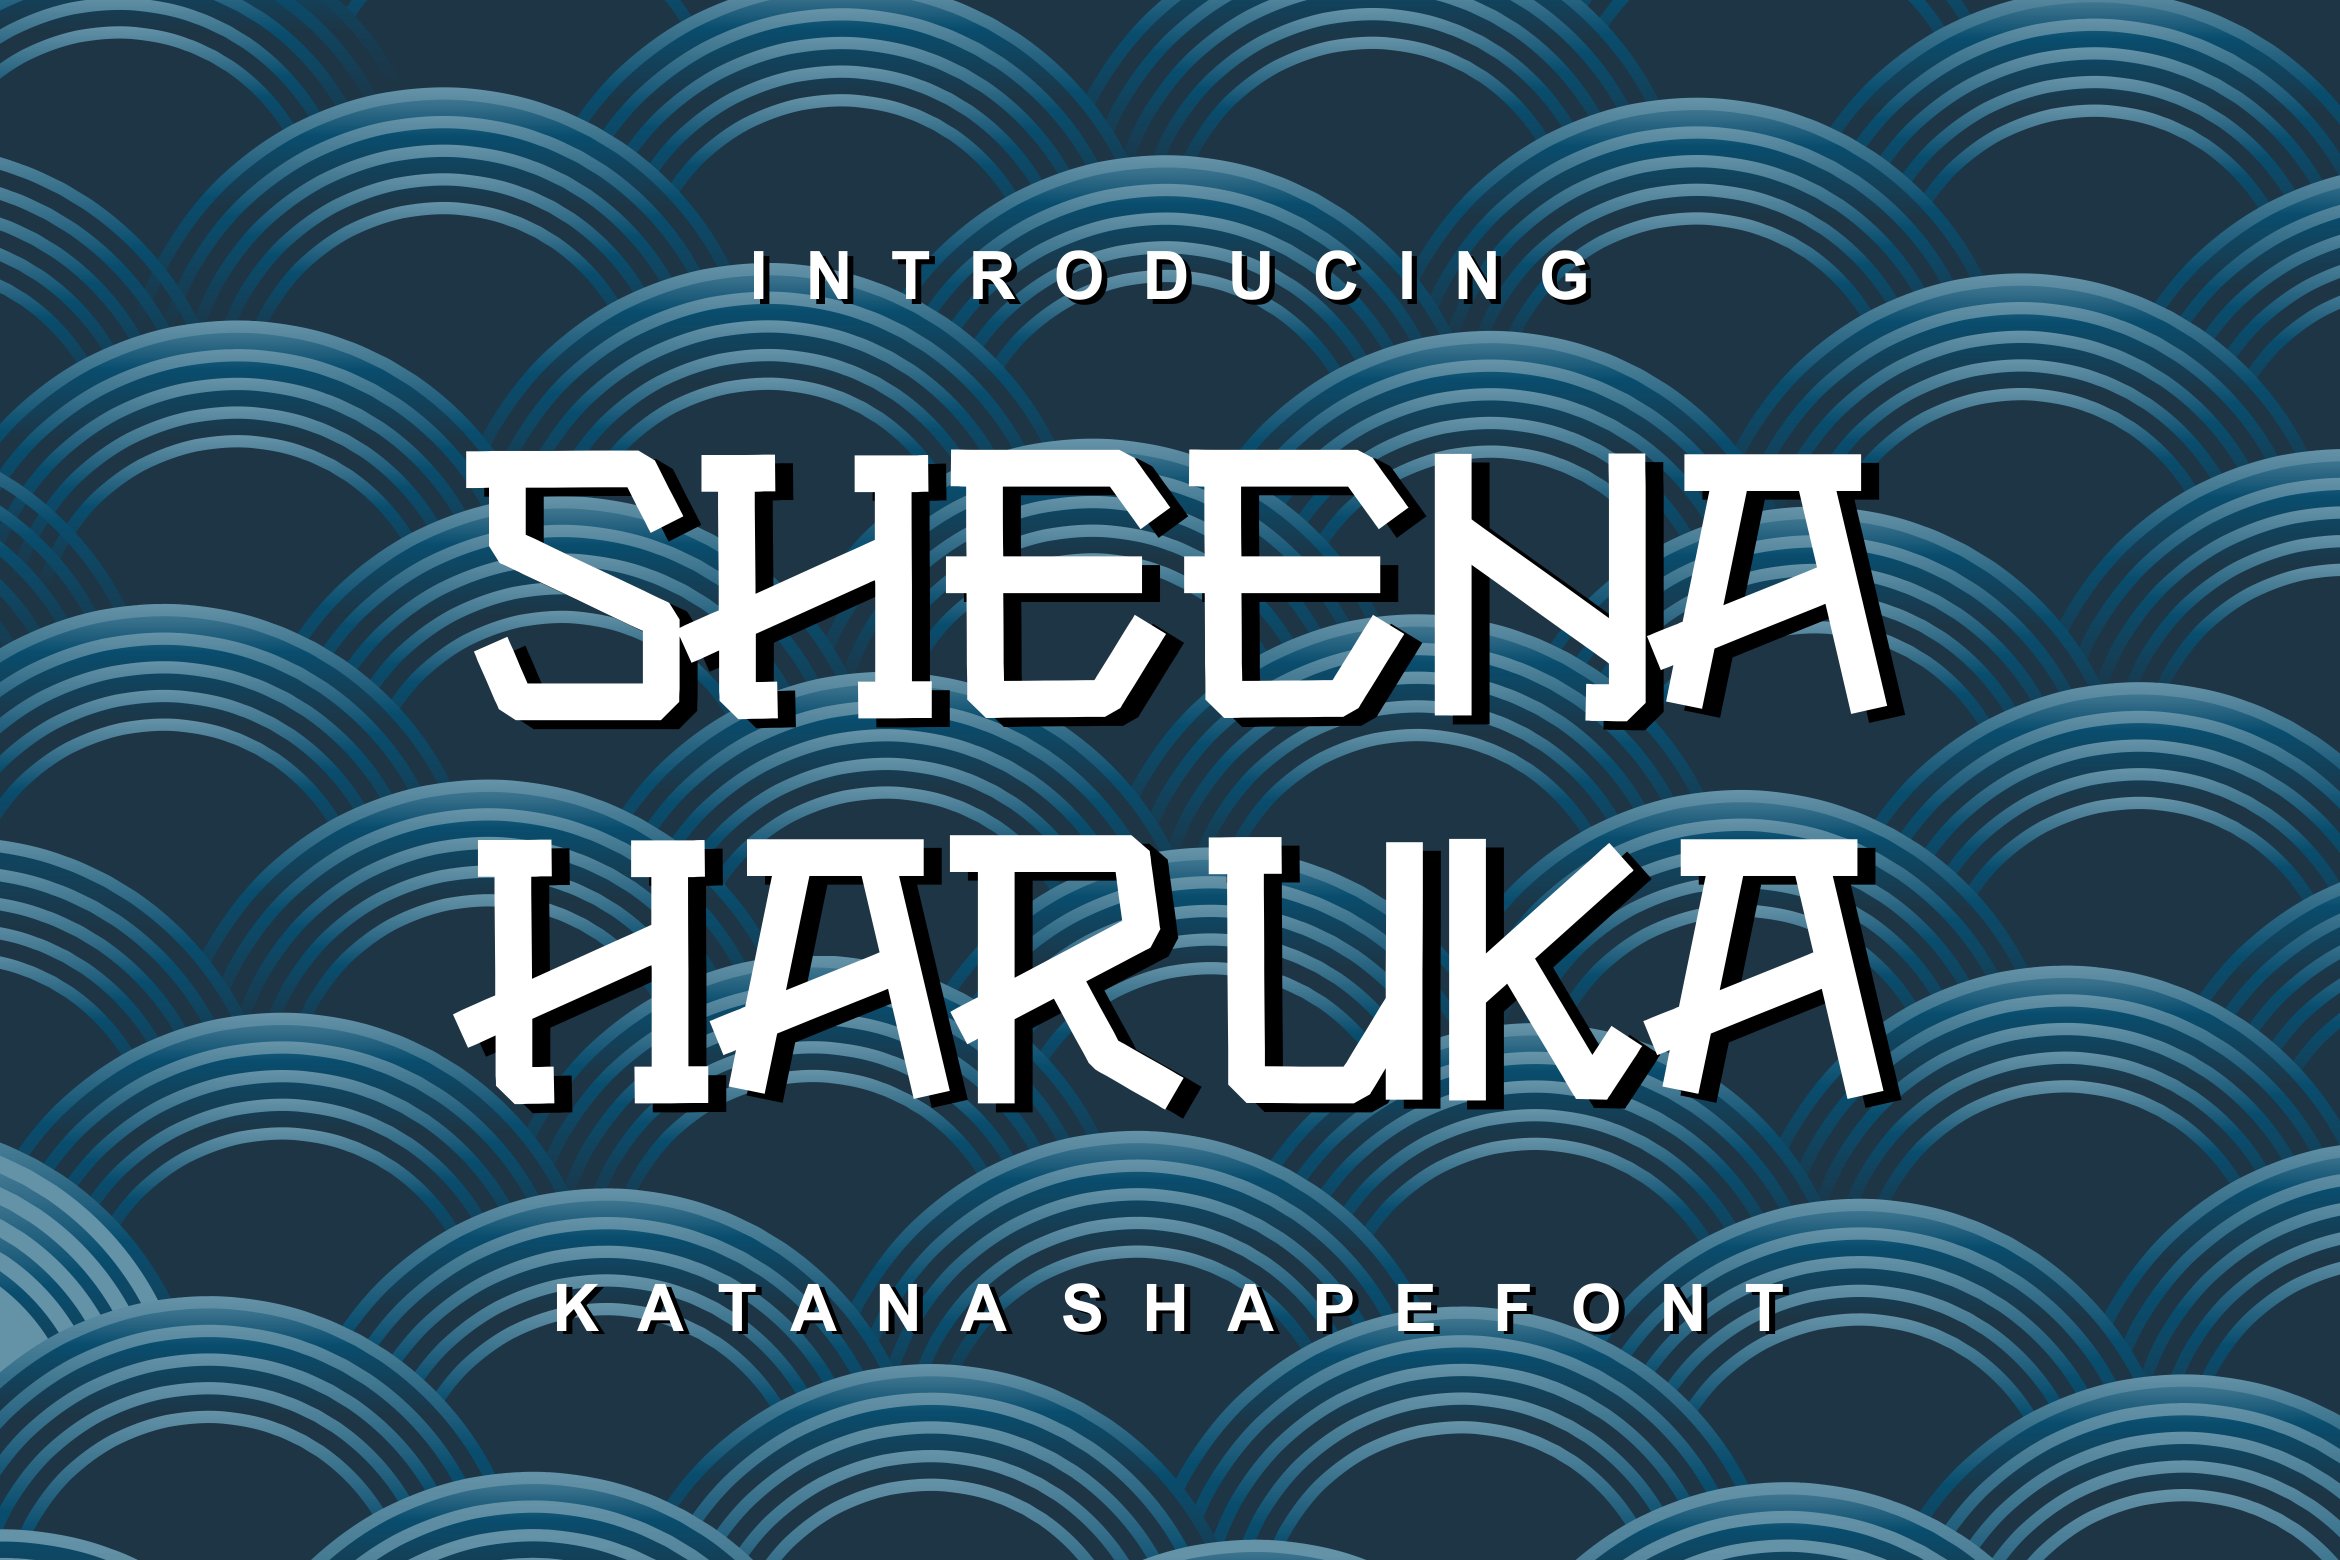 SheenaHaruka Japanese Font cover image.